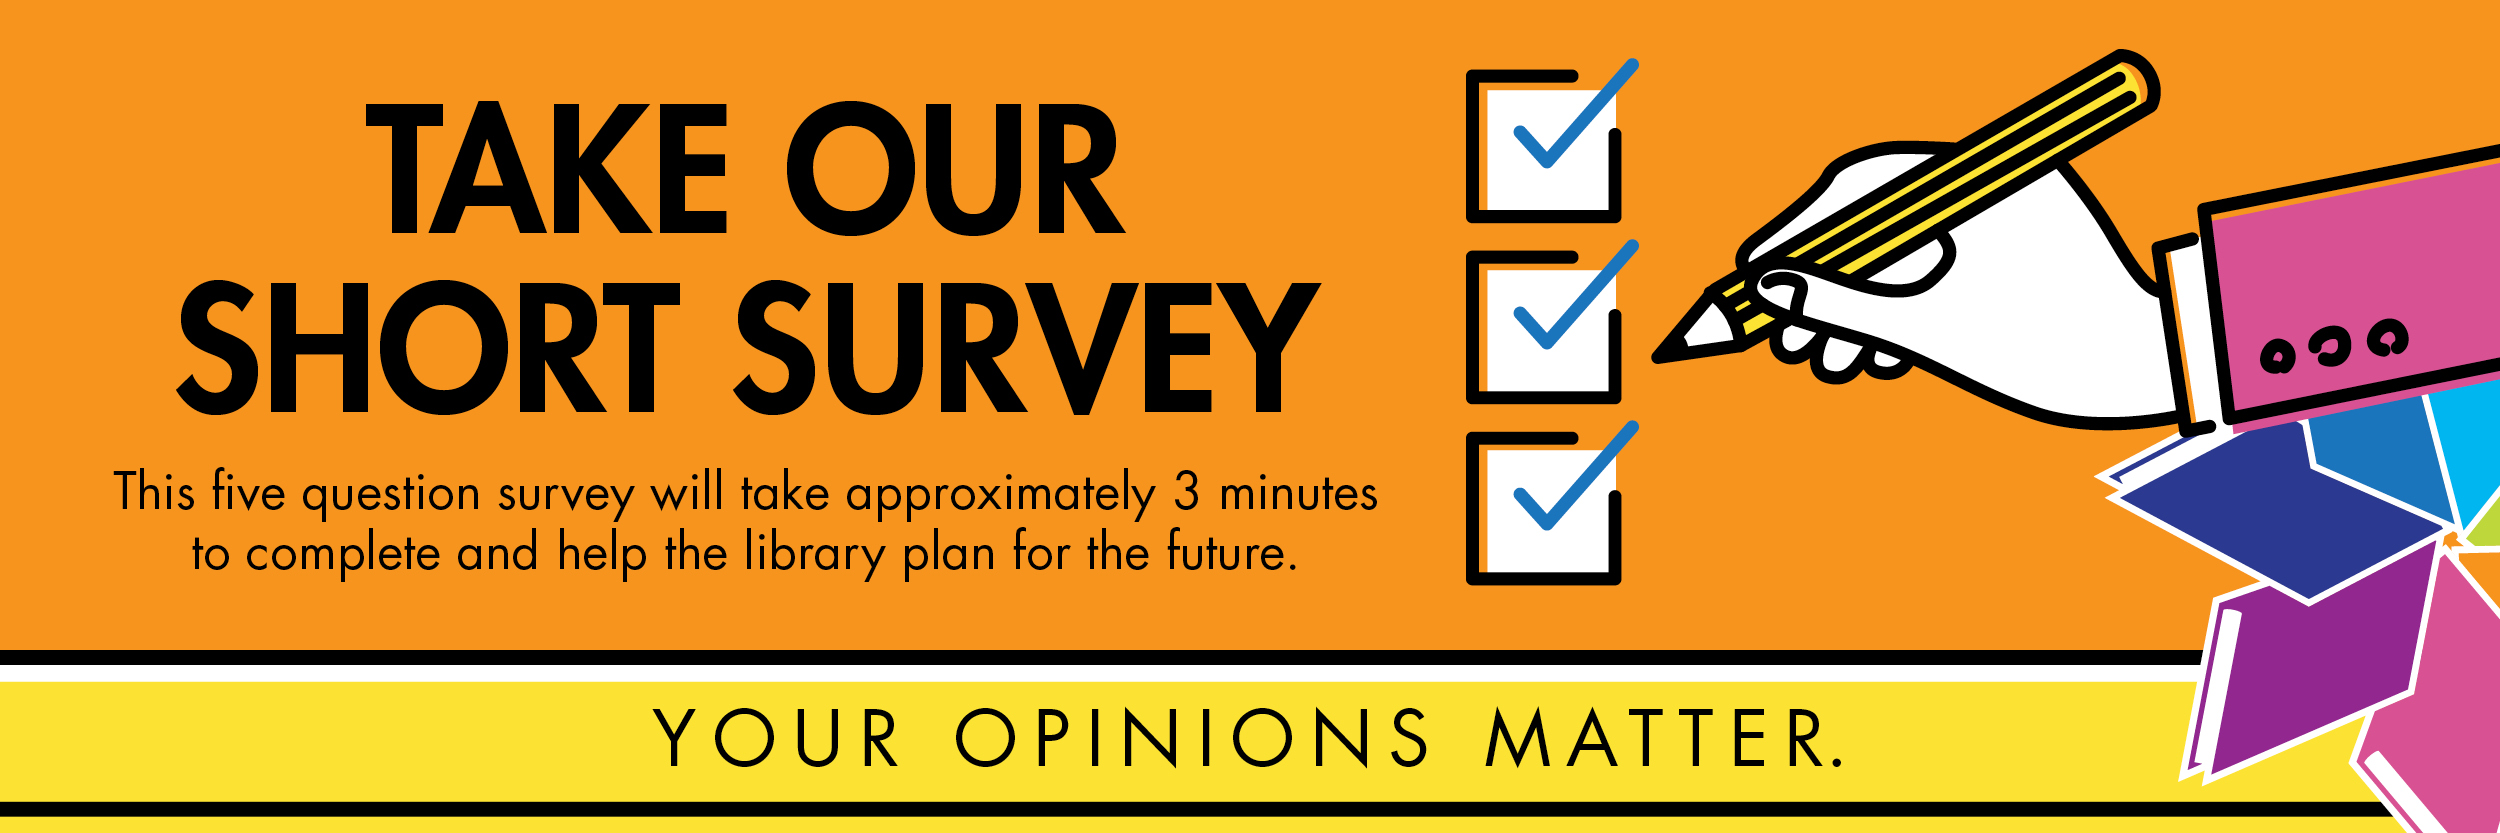 BCPL-Take our short survey